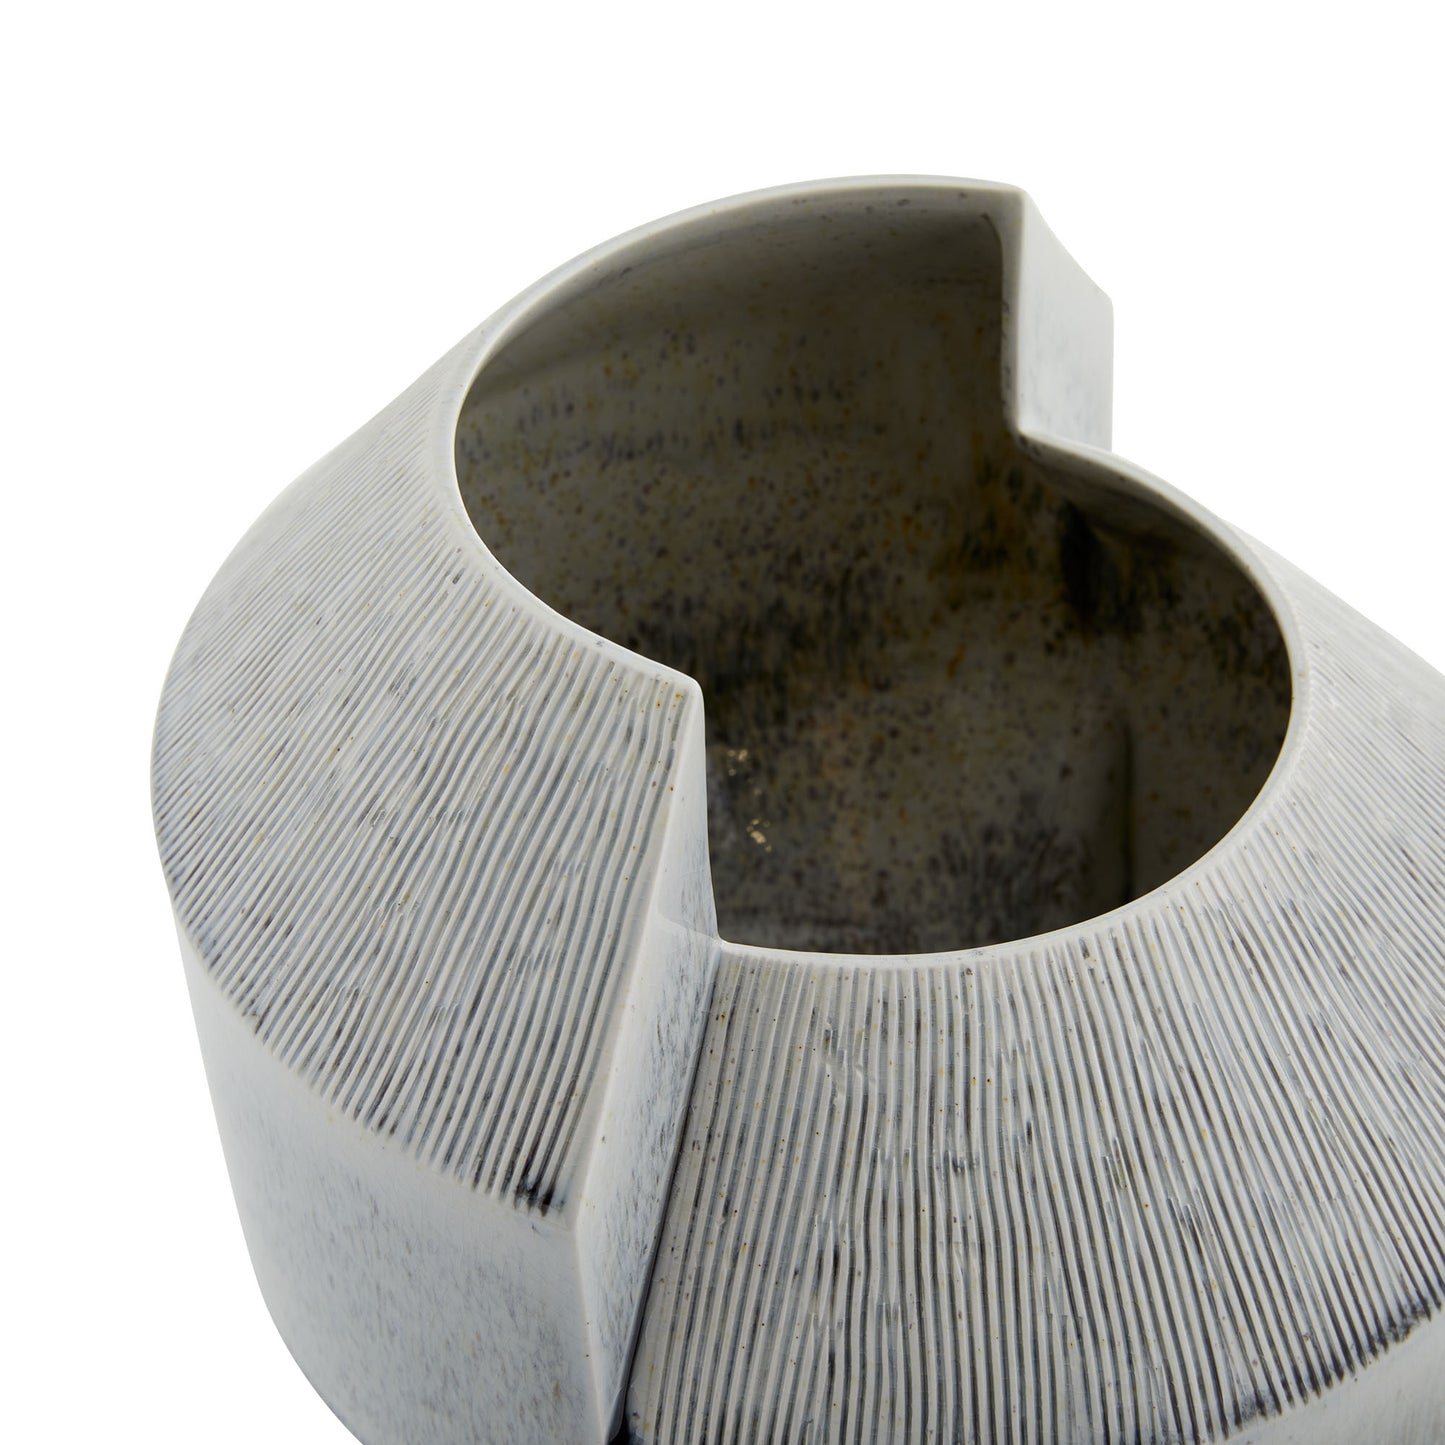 Marley Vase - Unique Porcelain Sculptural Design - Ice Reactive Glaze - Contemporary Home Decor